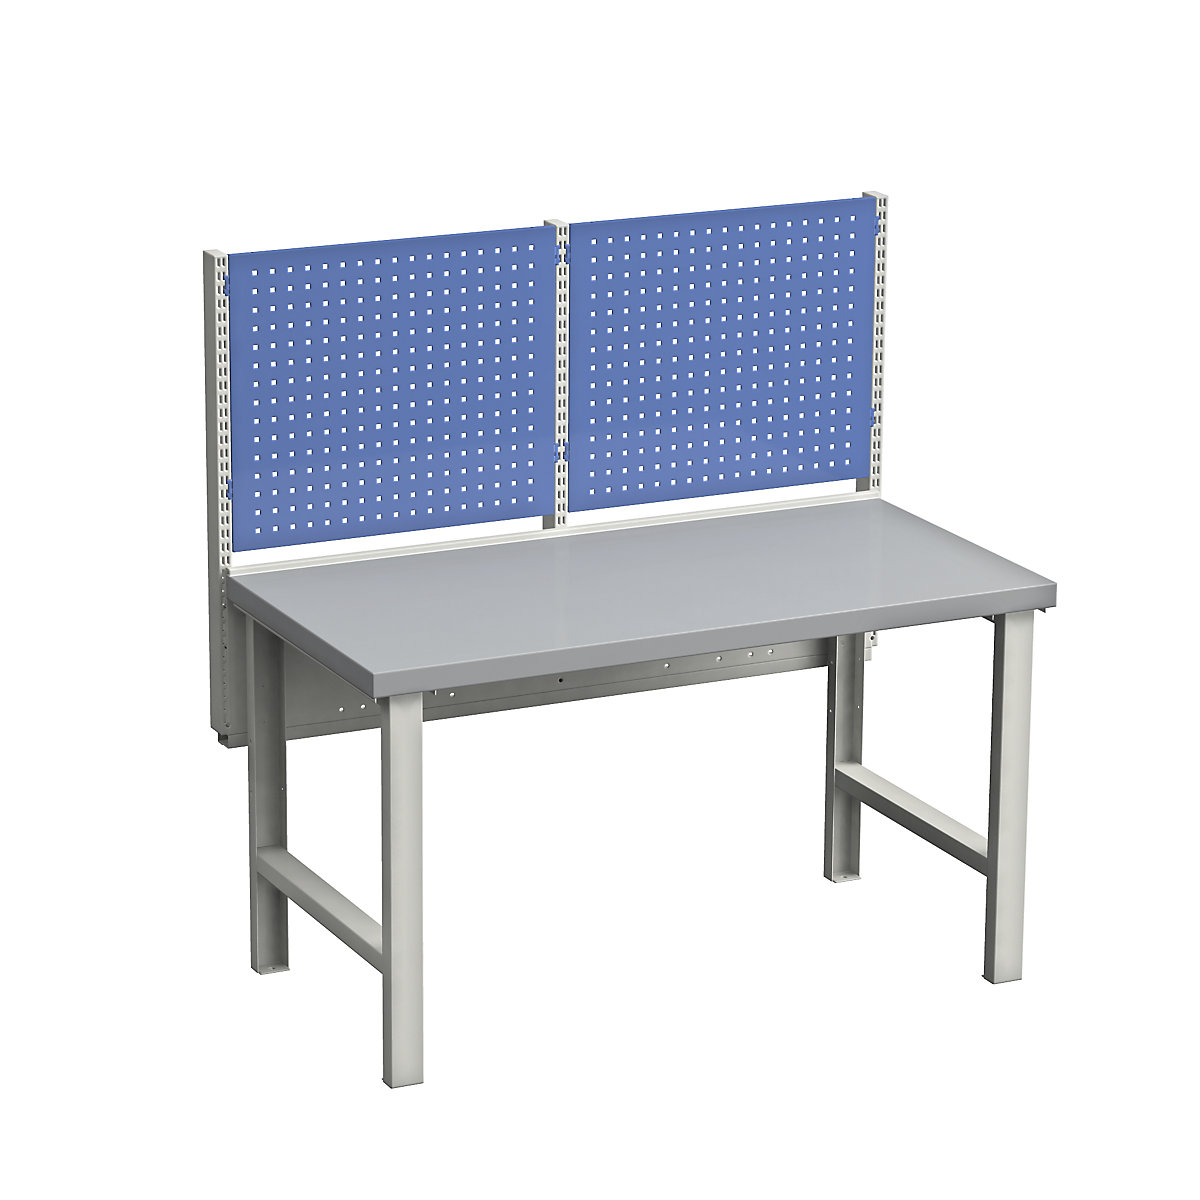 Treston – Dílenský stůl, stavebnicový systém, se 2 děrovanými deskami, deska z ocelového plechu, š x h 1500 x 750 mm